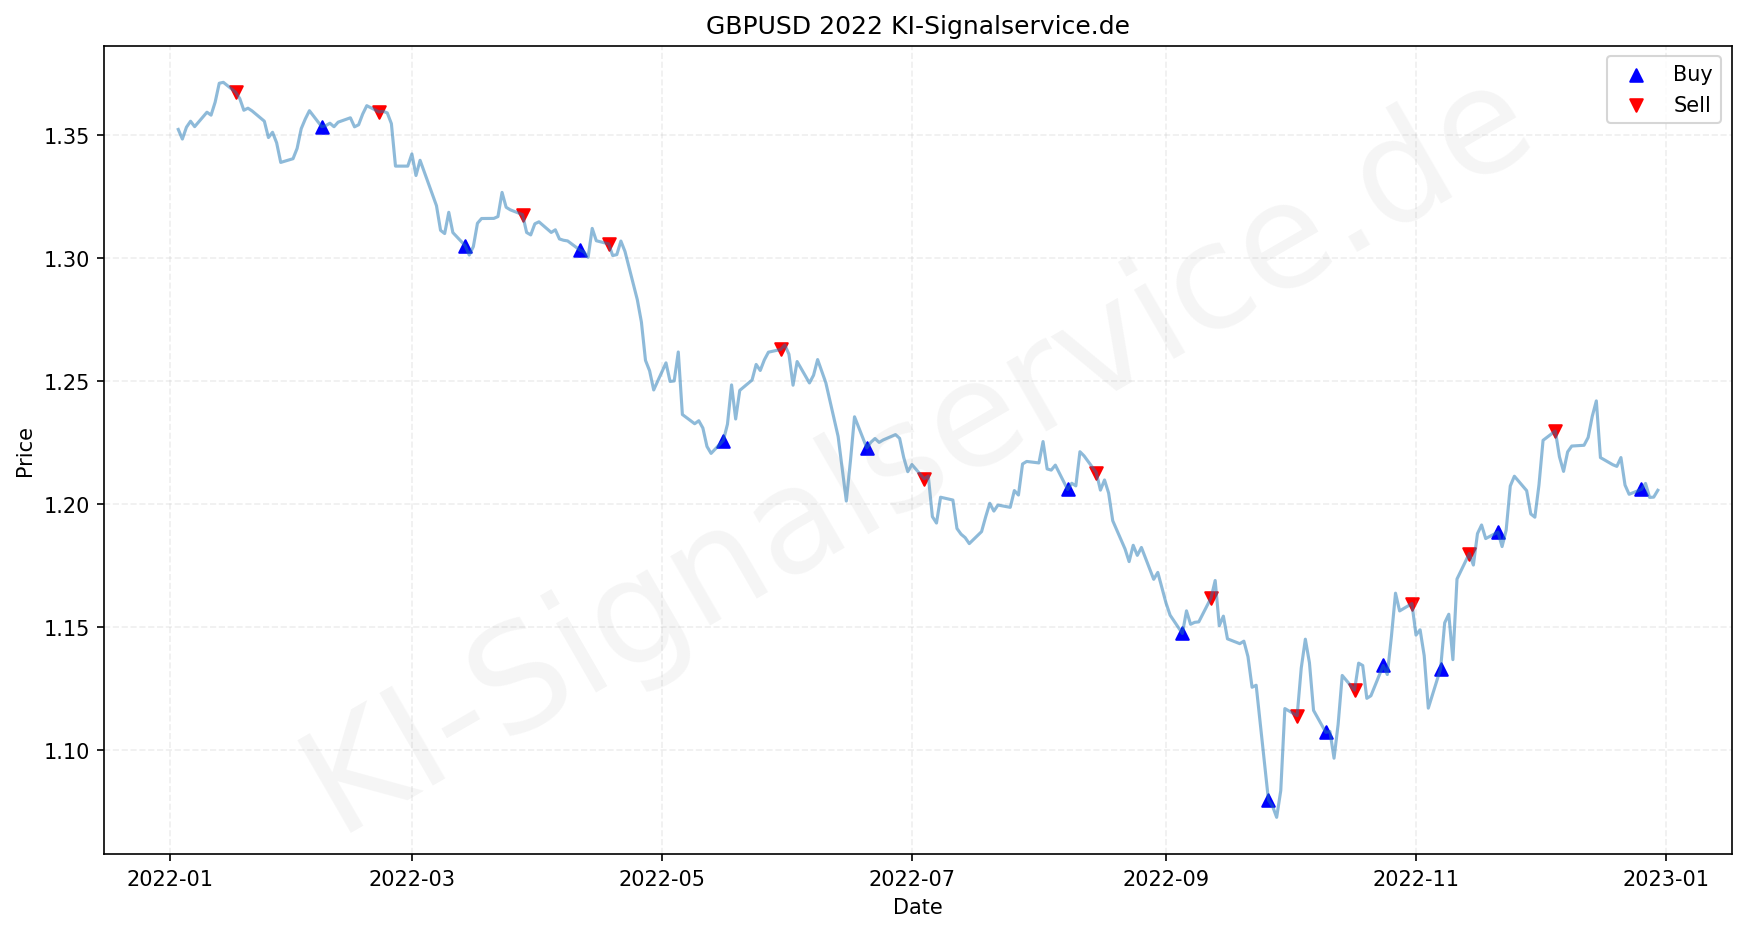 GBPUSD Chart - KI Tradingsignale 2022